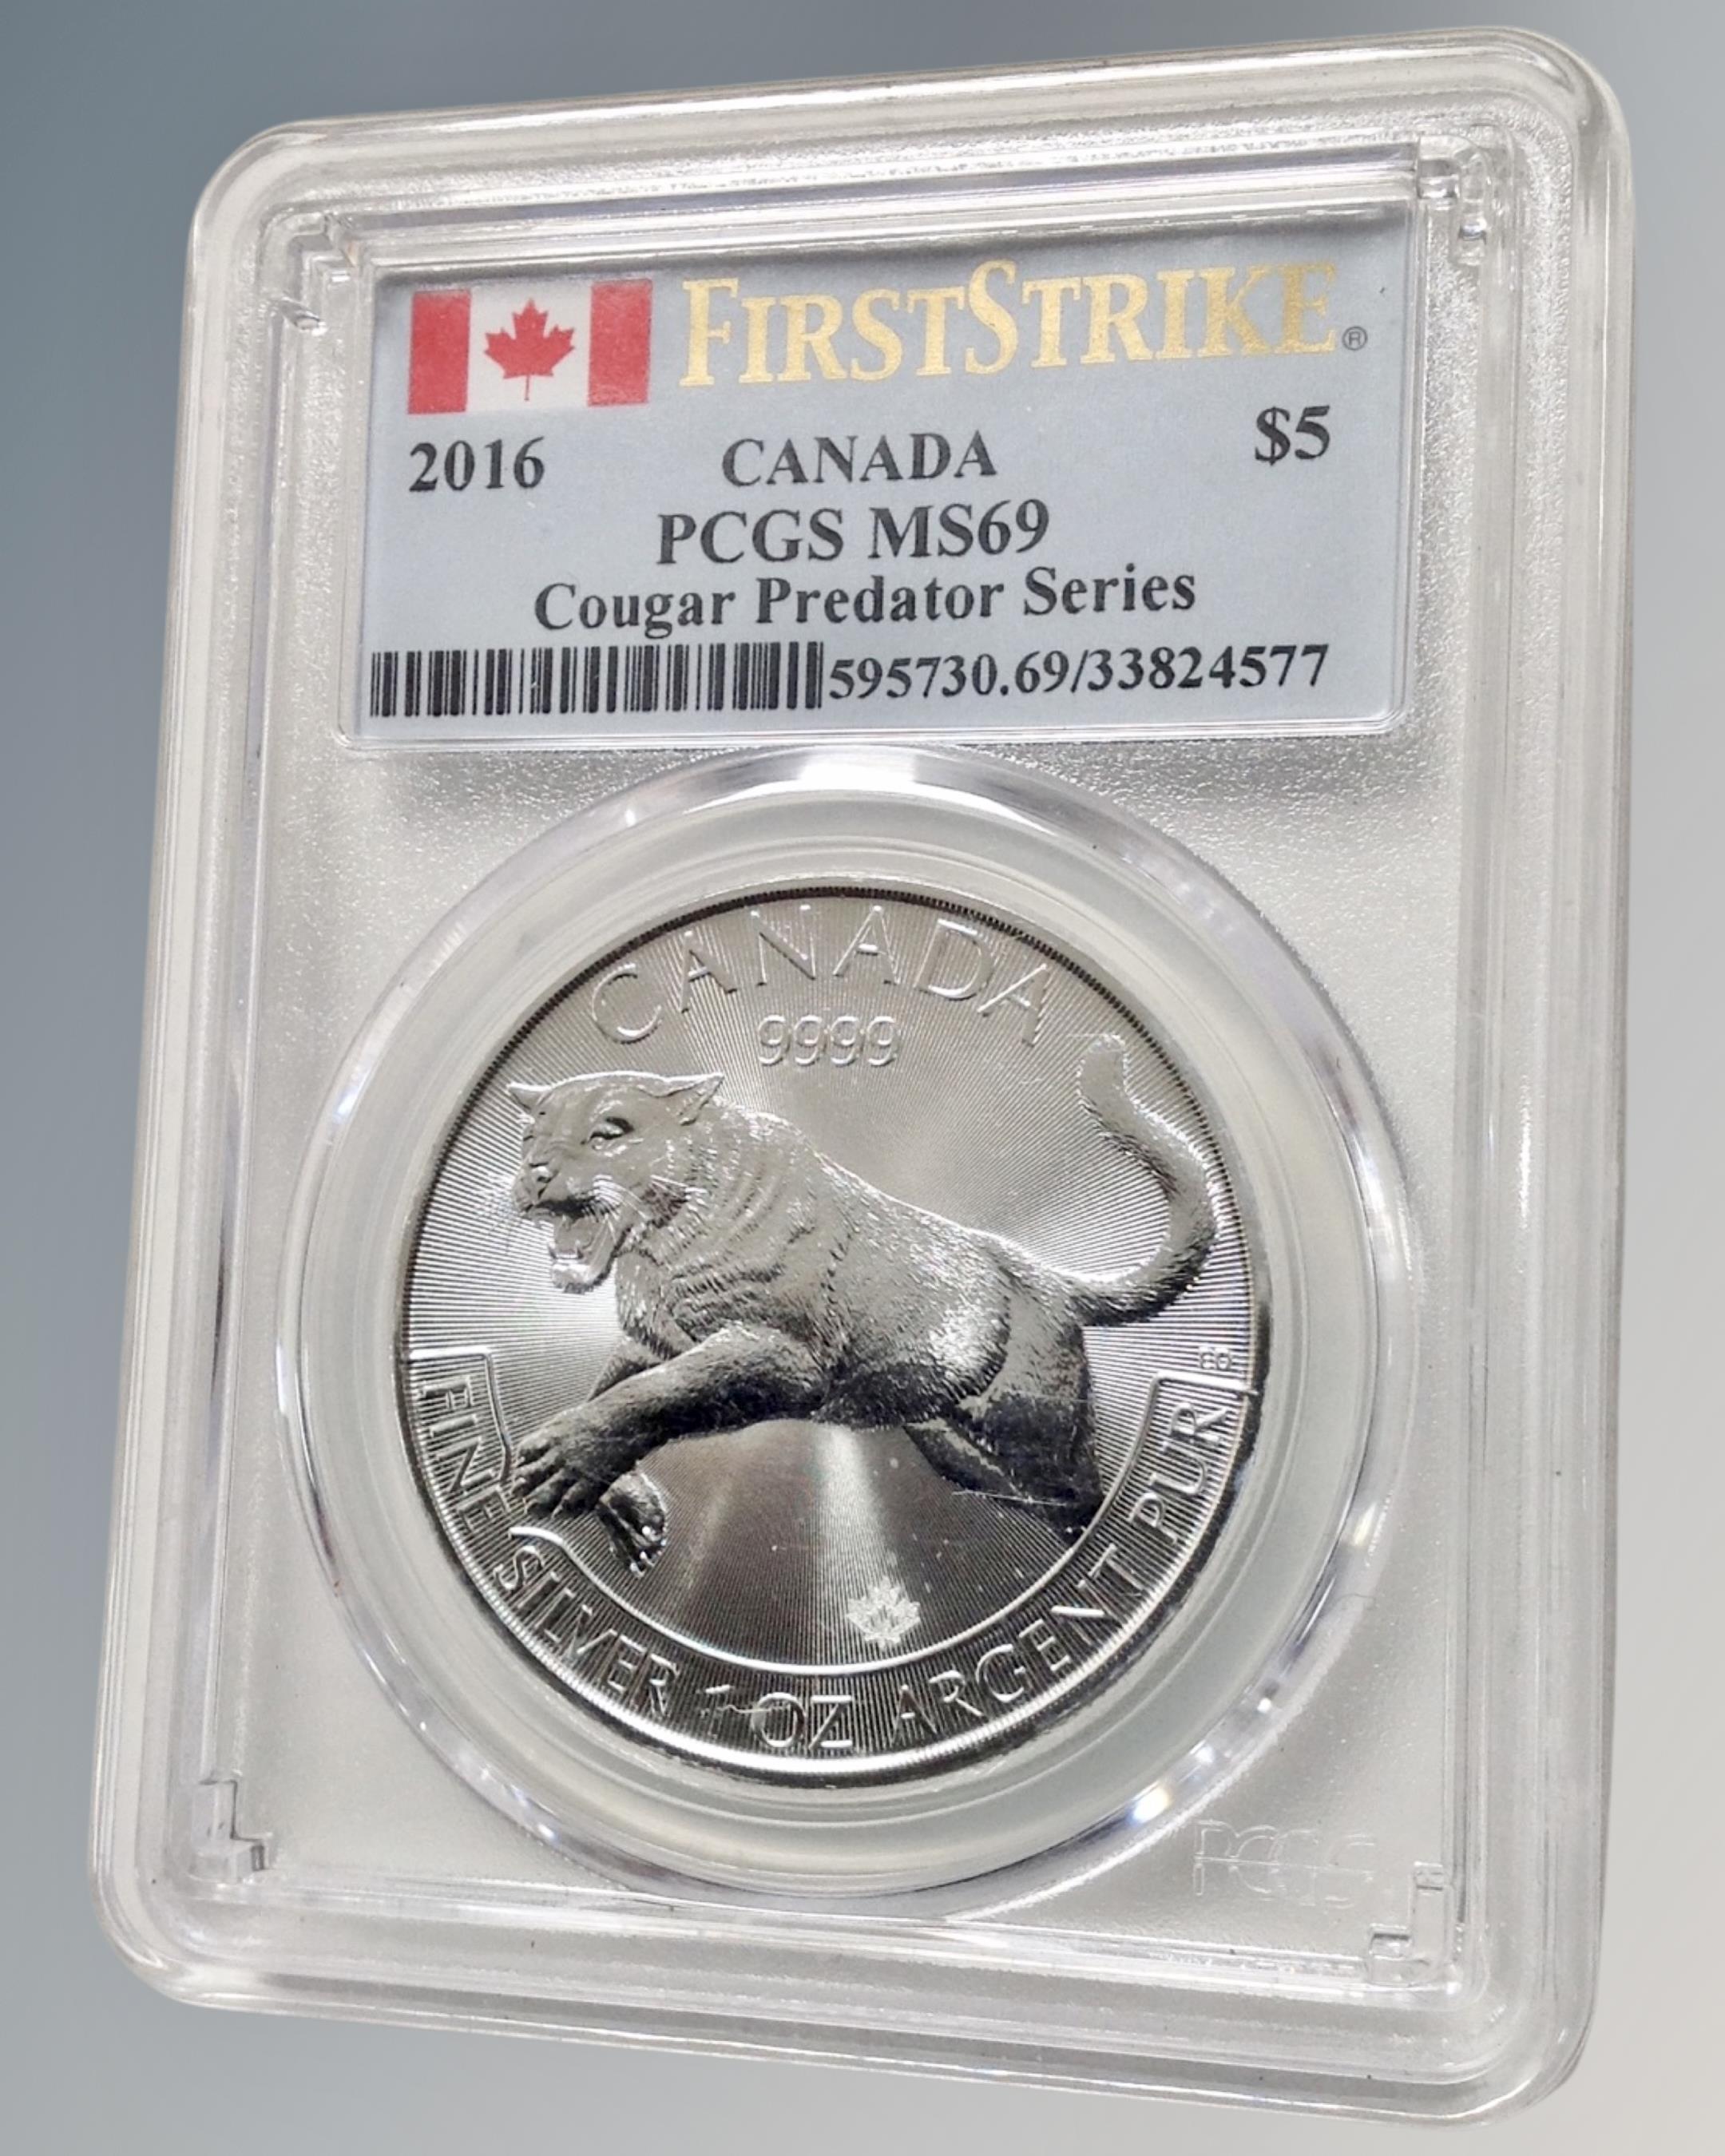 A 2016 Canadian $5 First Strike Cougar Predator Series 1oz fine silver coin.